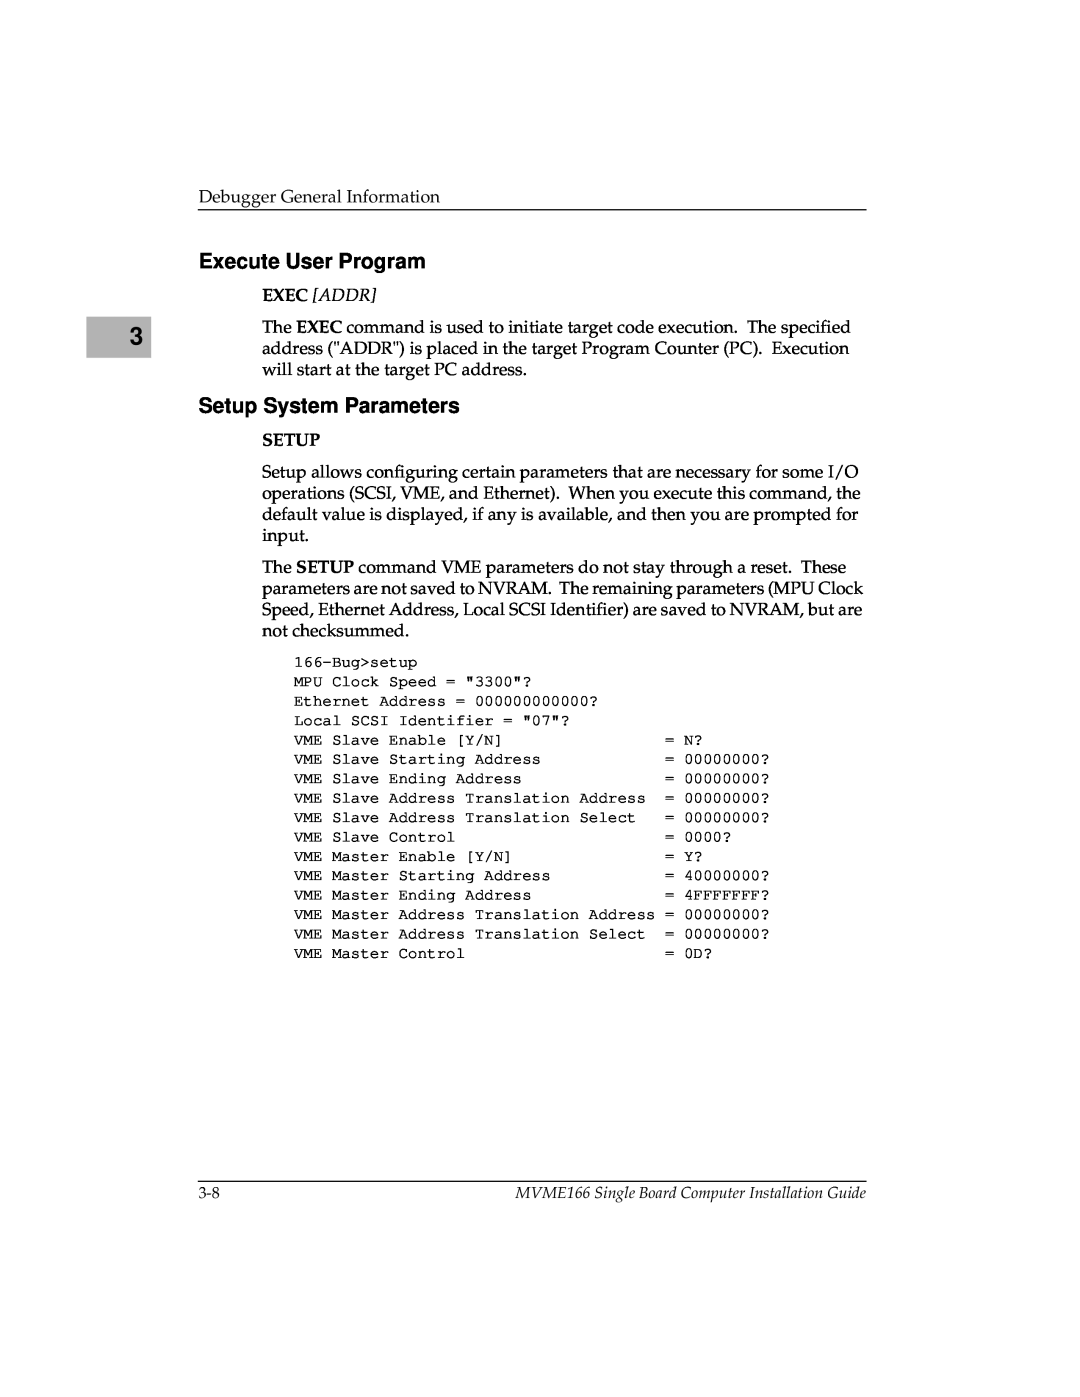 Motorola MVME166IG/D2, MVME166D2 manual Execute User Program, Setup System Parameters, Exec Addr 